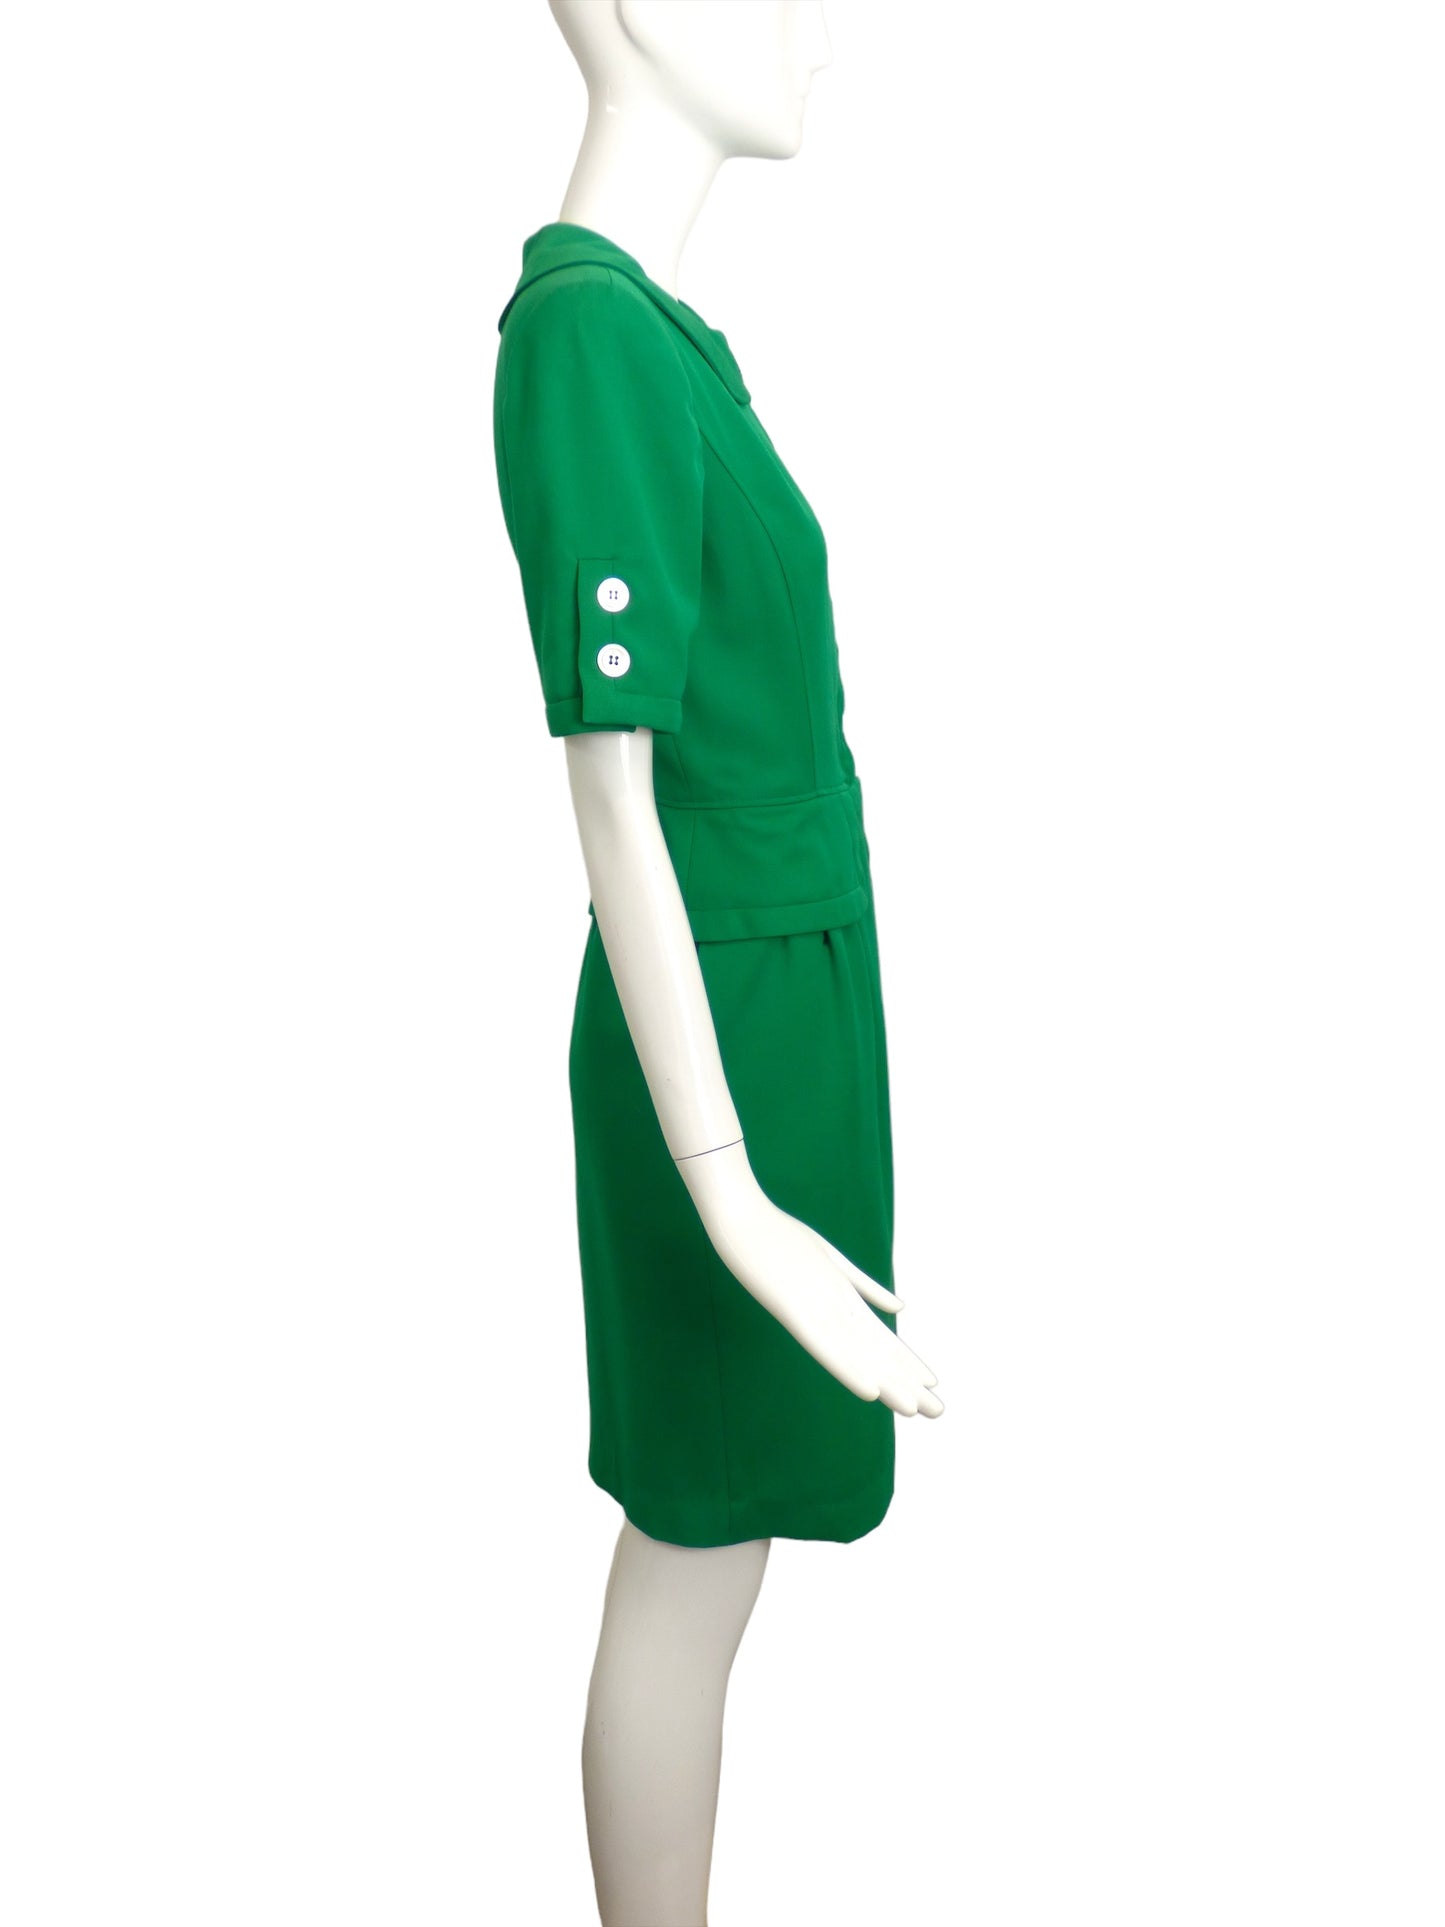 VALENTINO-1980s Green Wool Dress, Size-6